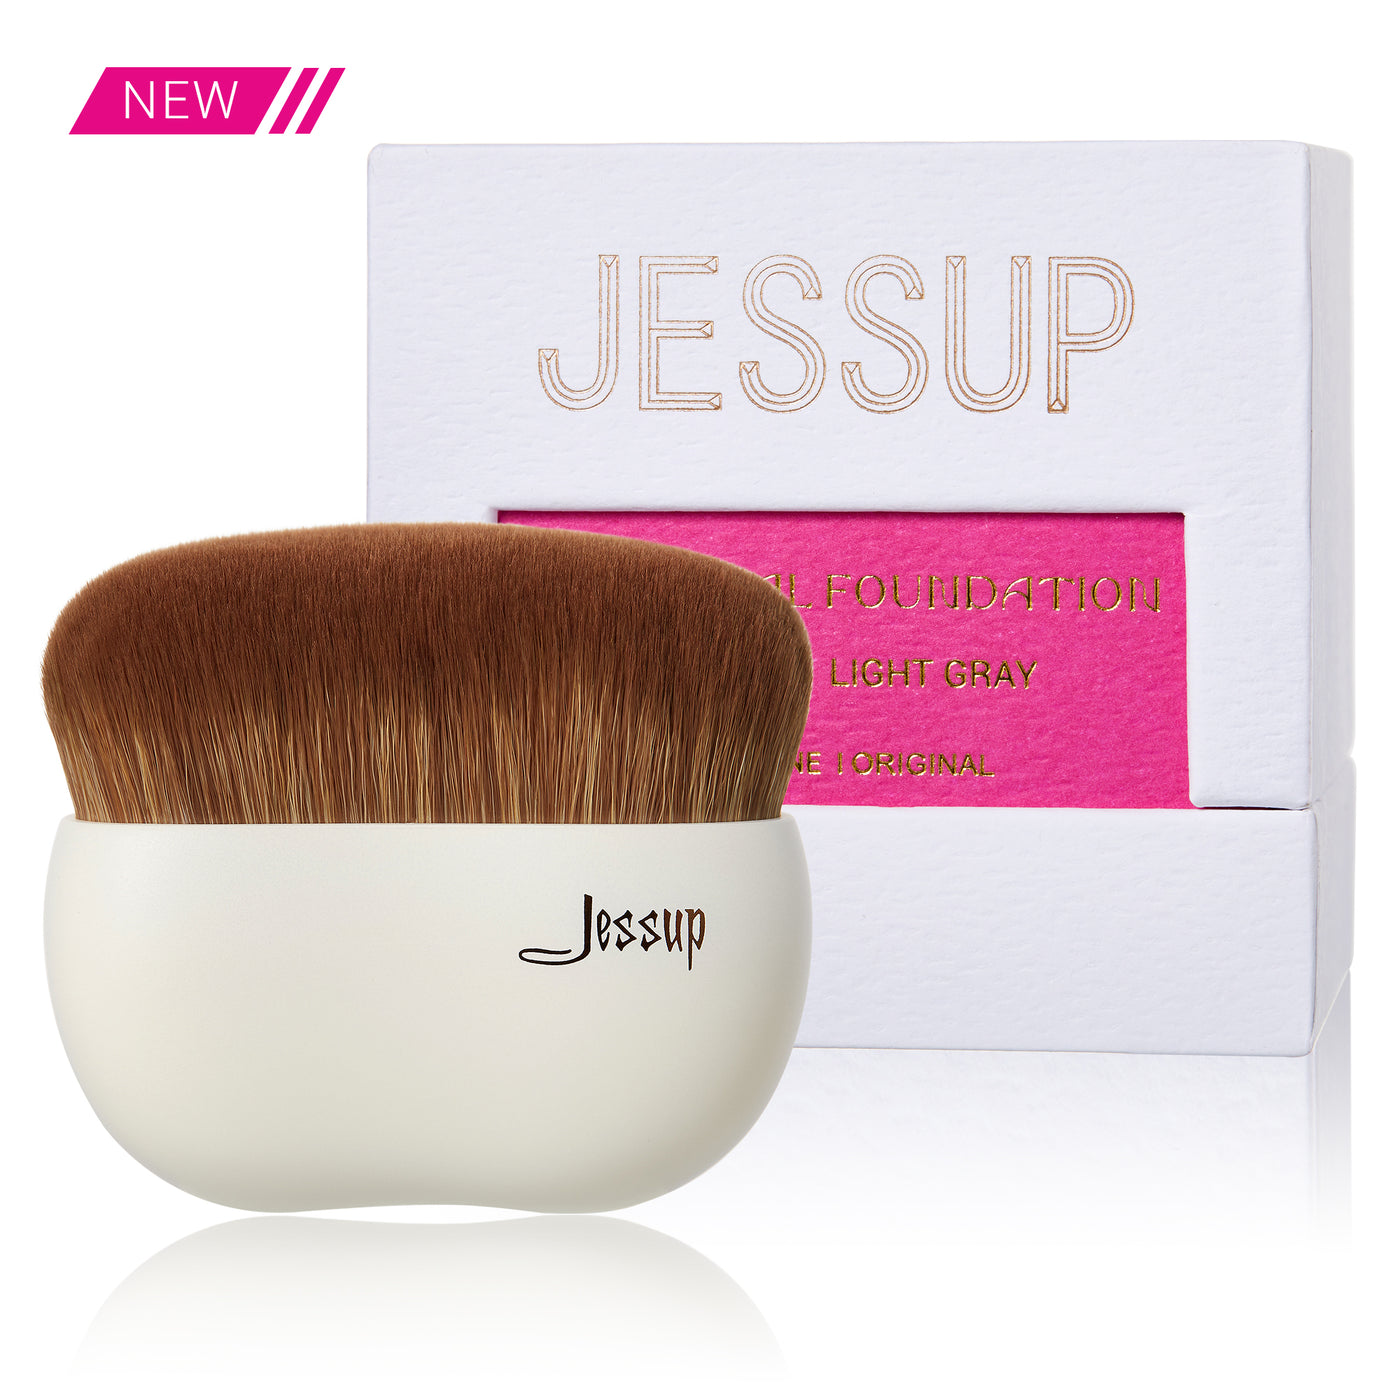 Jessup foundation makeup brush ligh grey